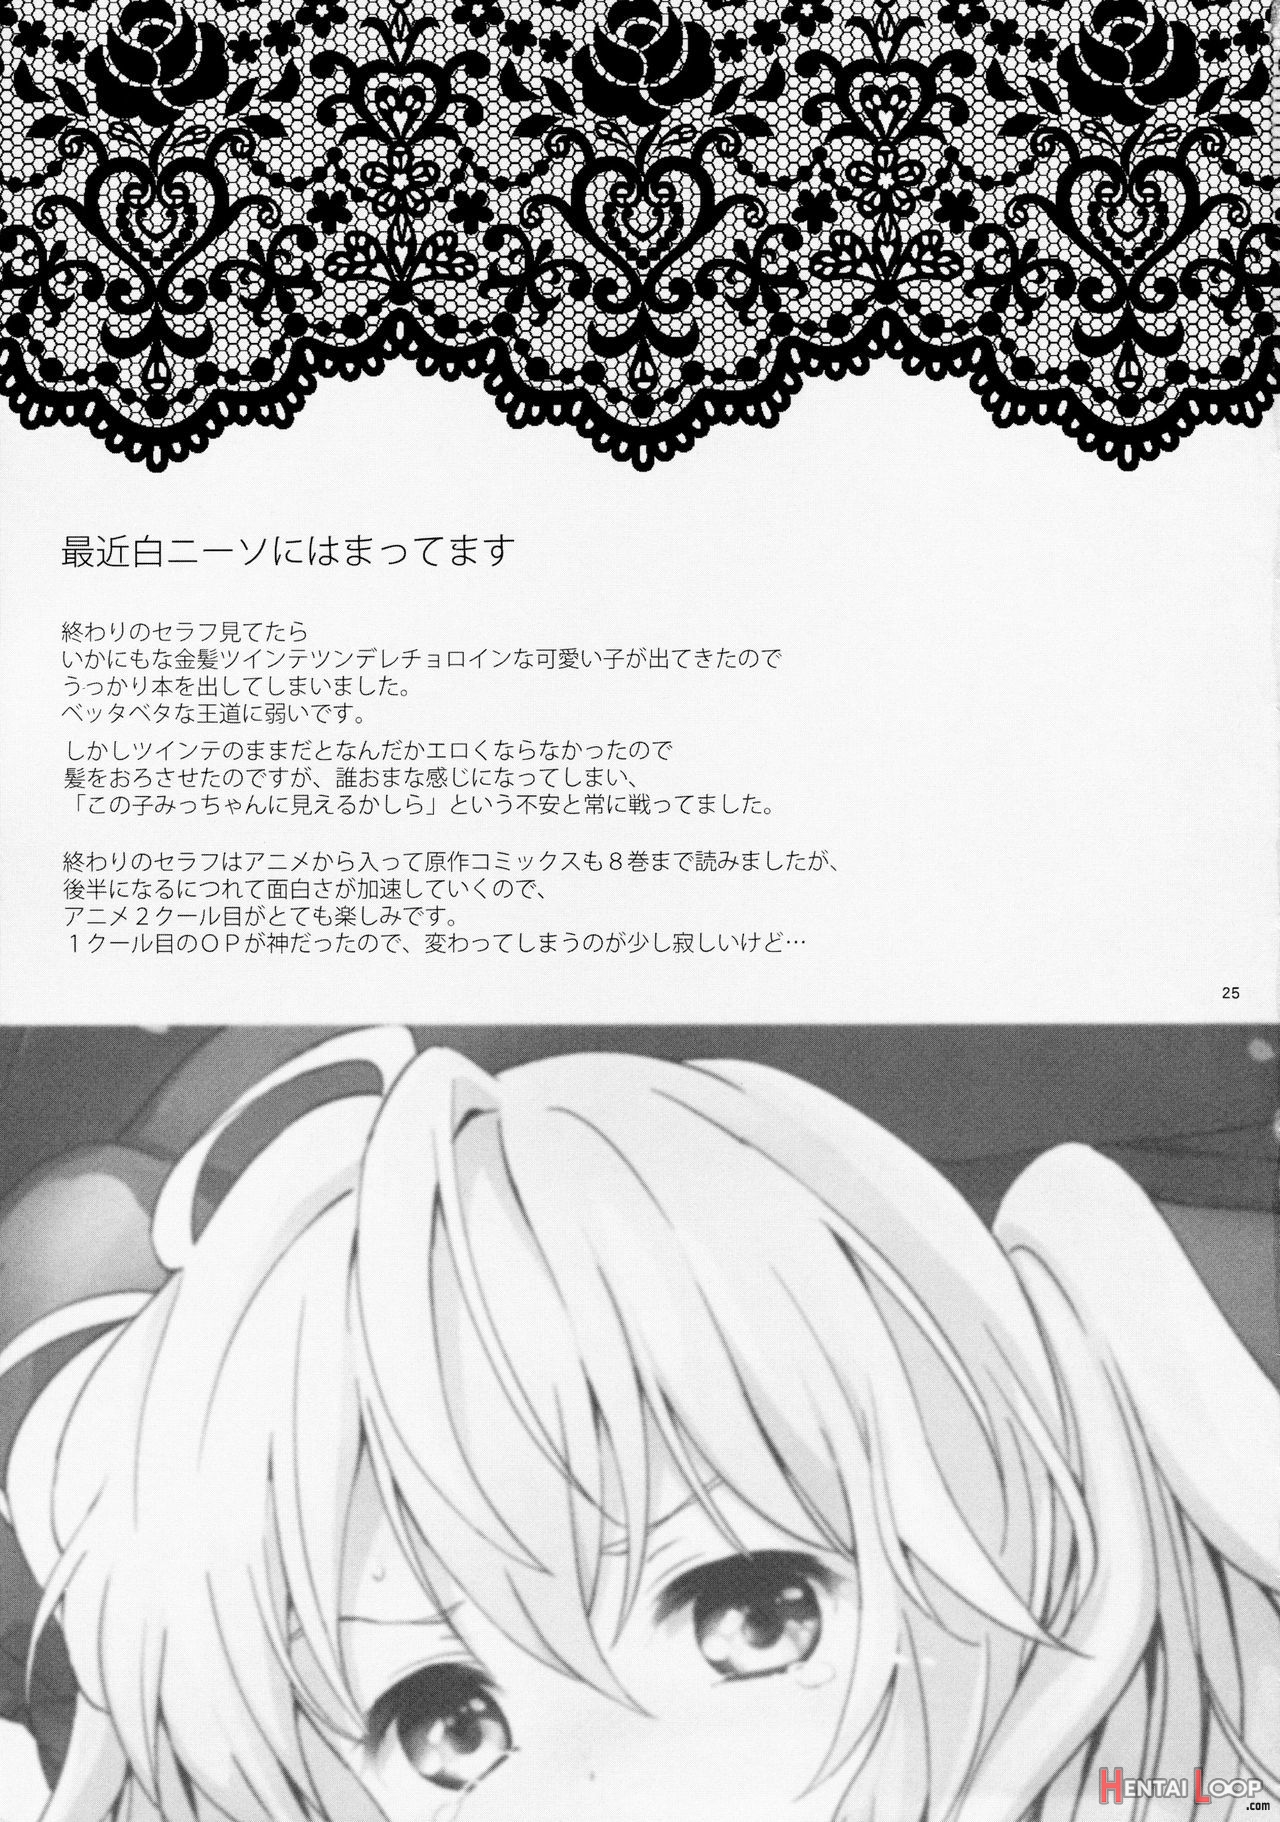 Mitsuba Love Story page 26